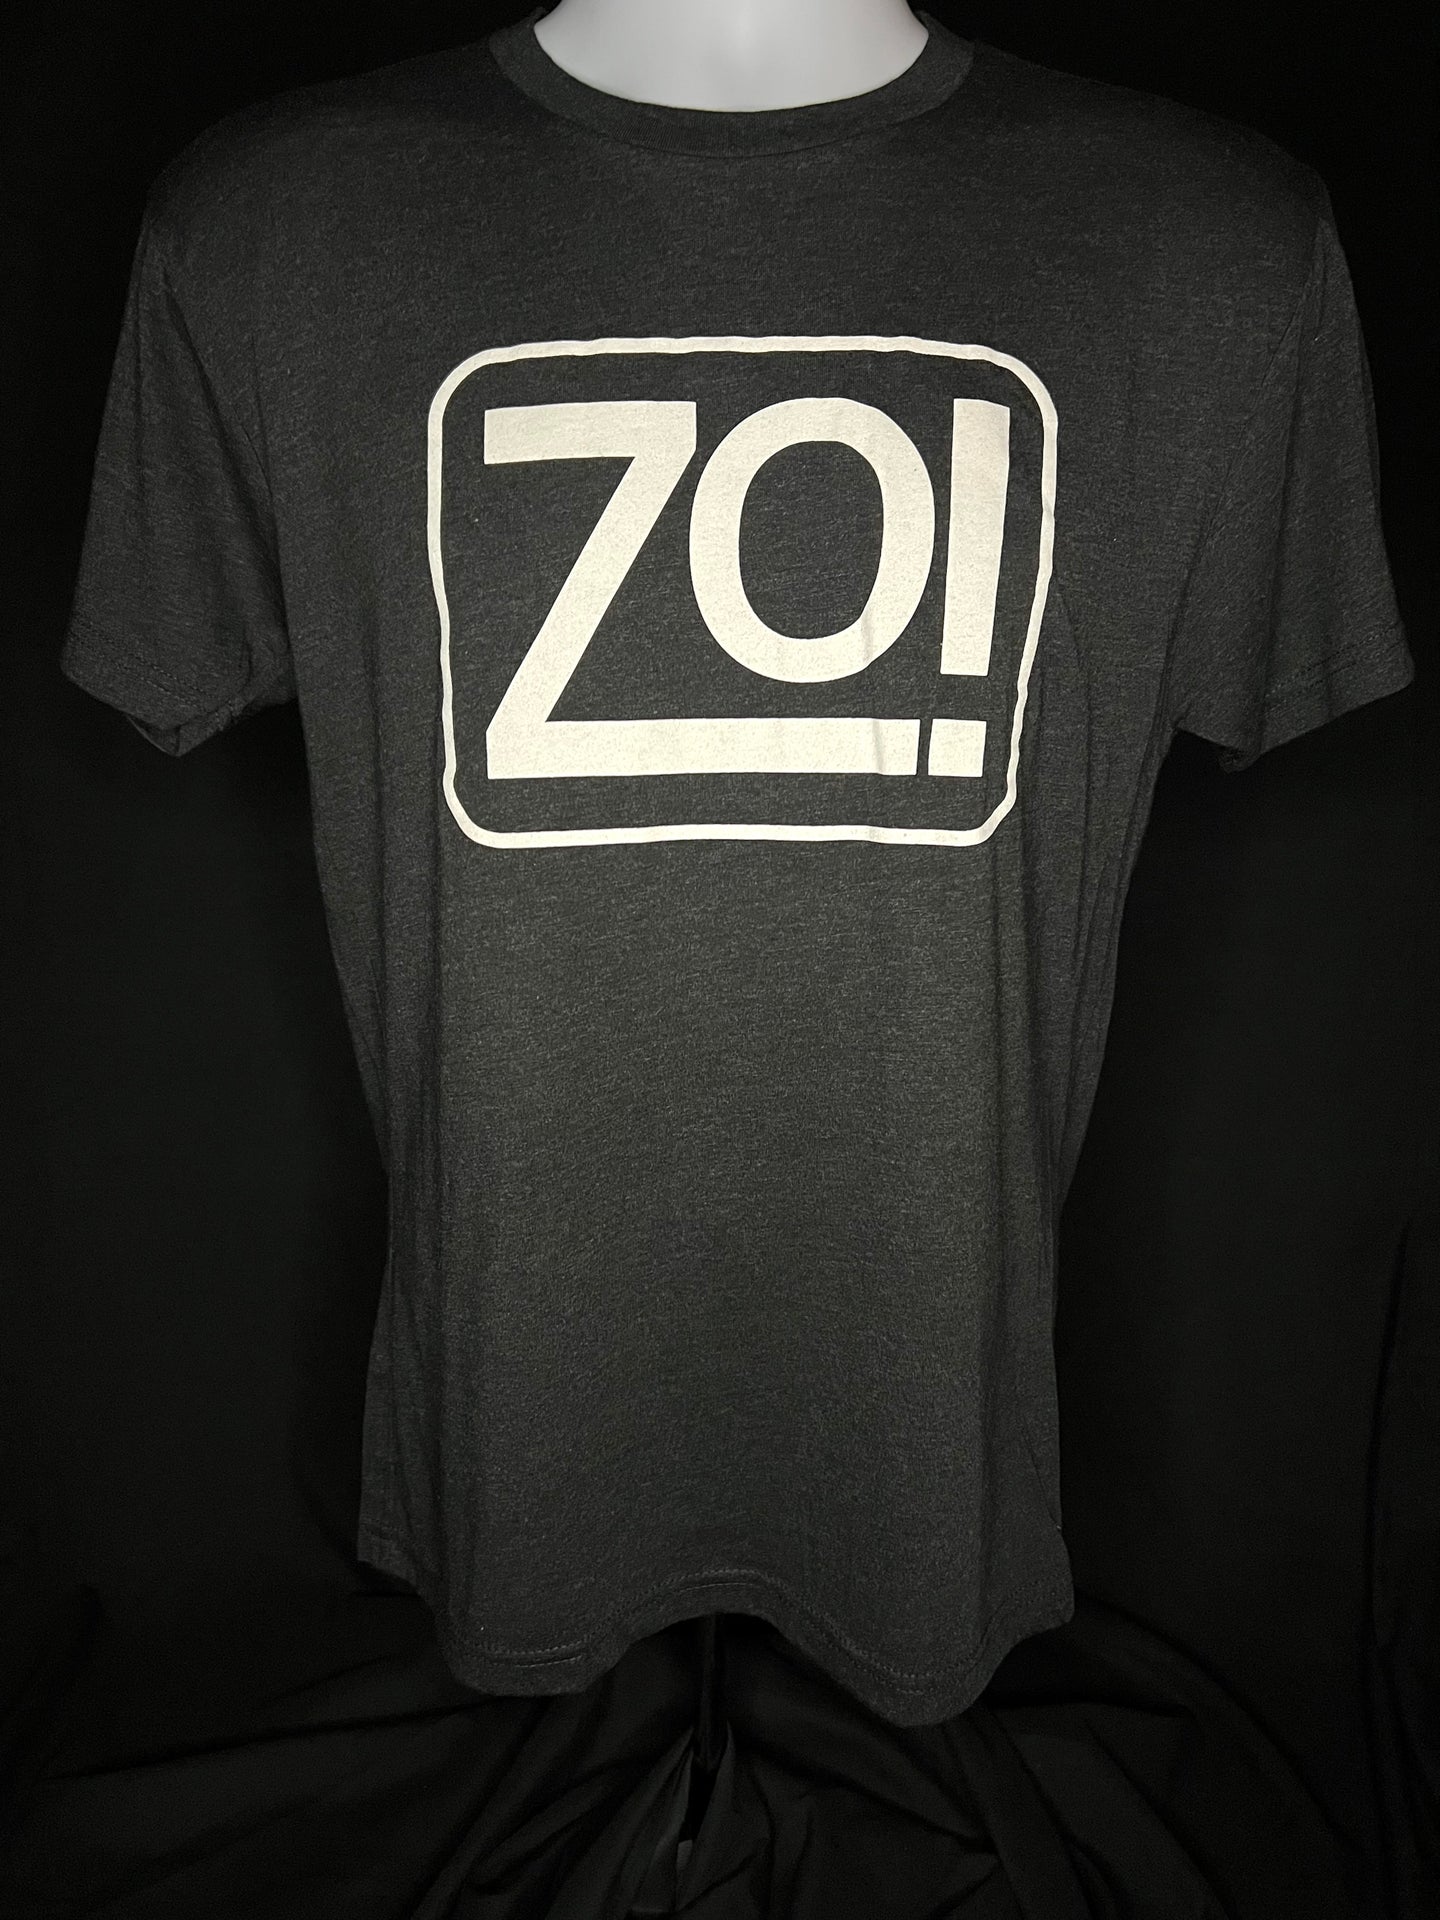 Zo! Black Tri-Blend T-Shirt (Men's)